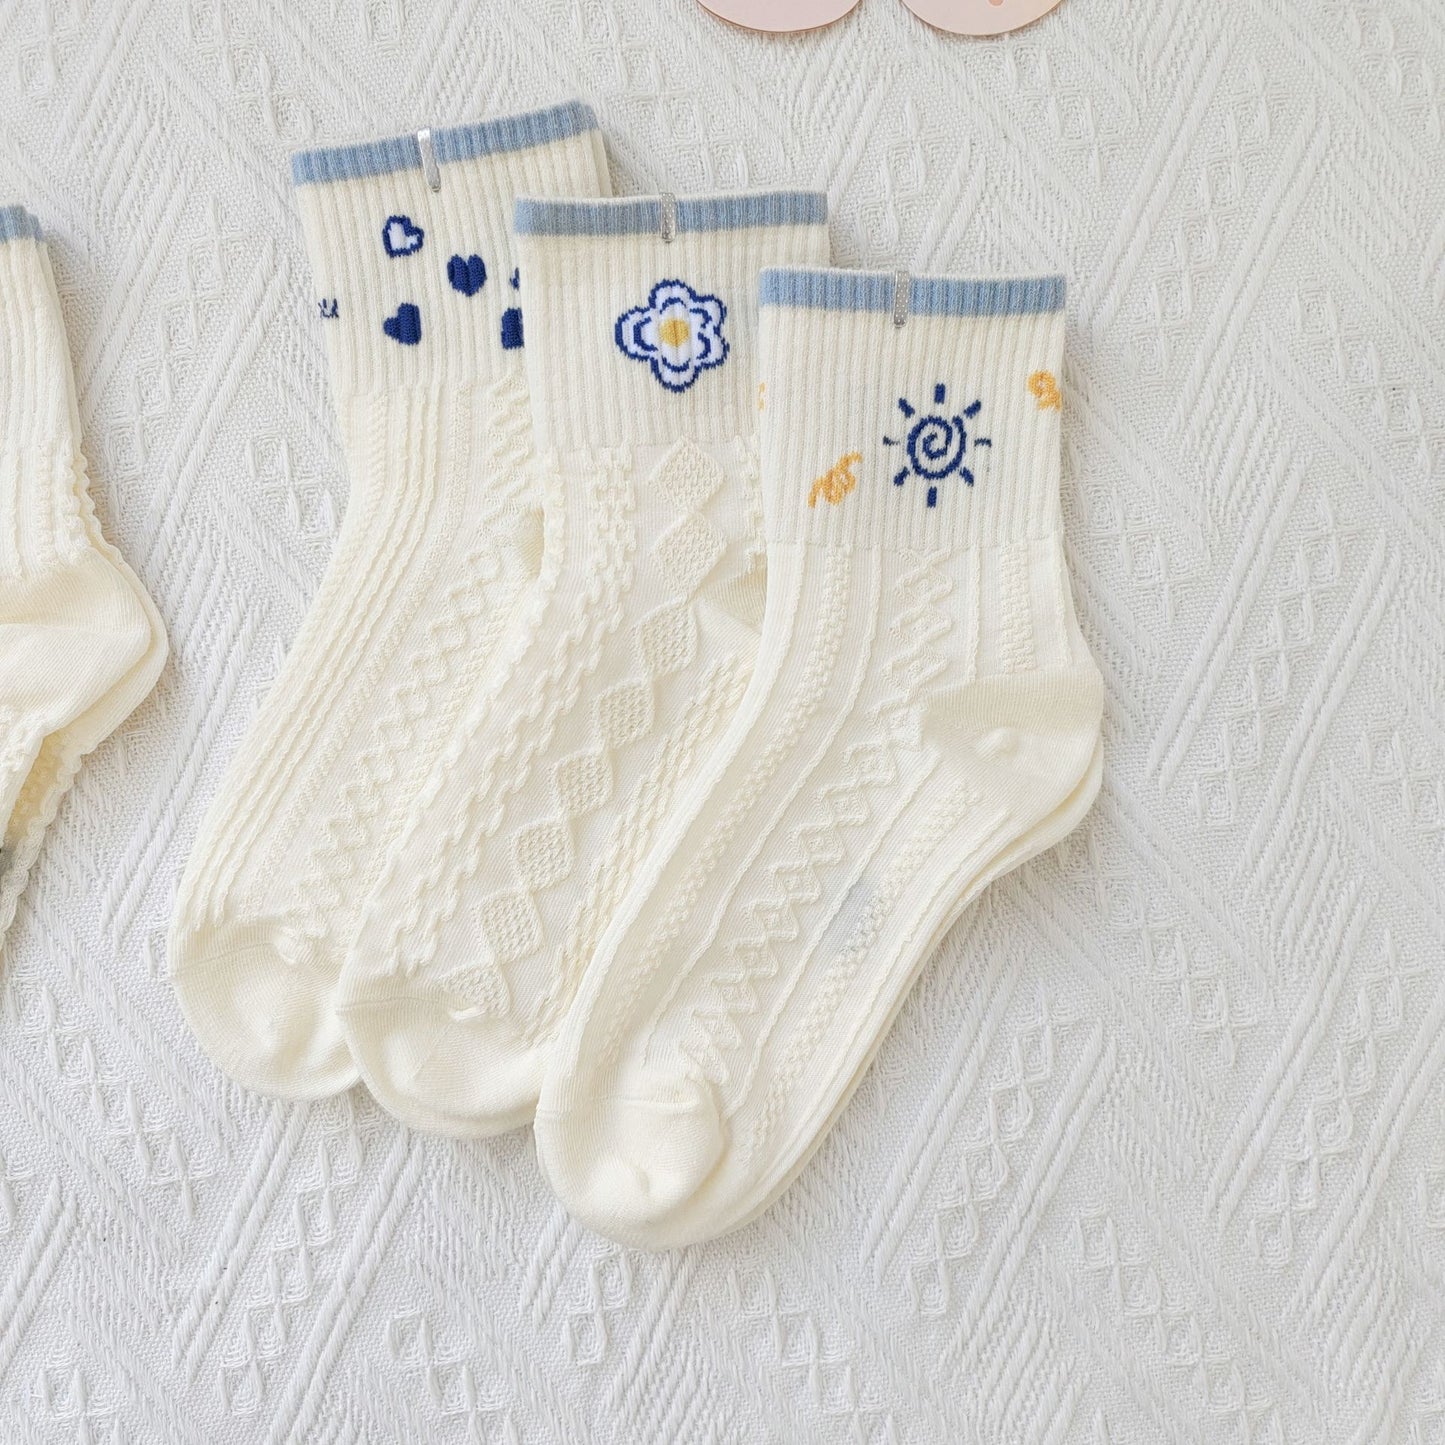 Cotton comfort socks in white